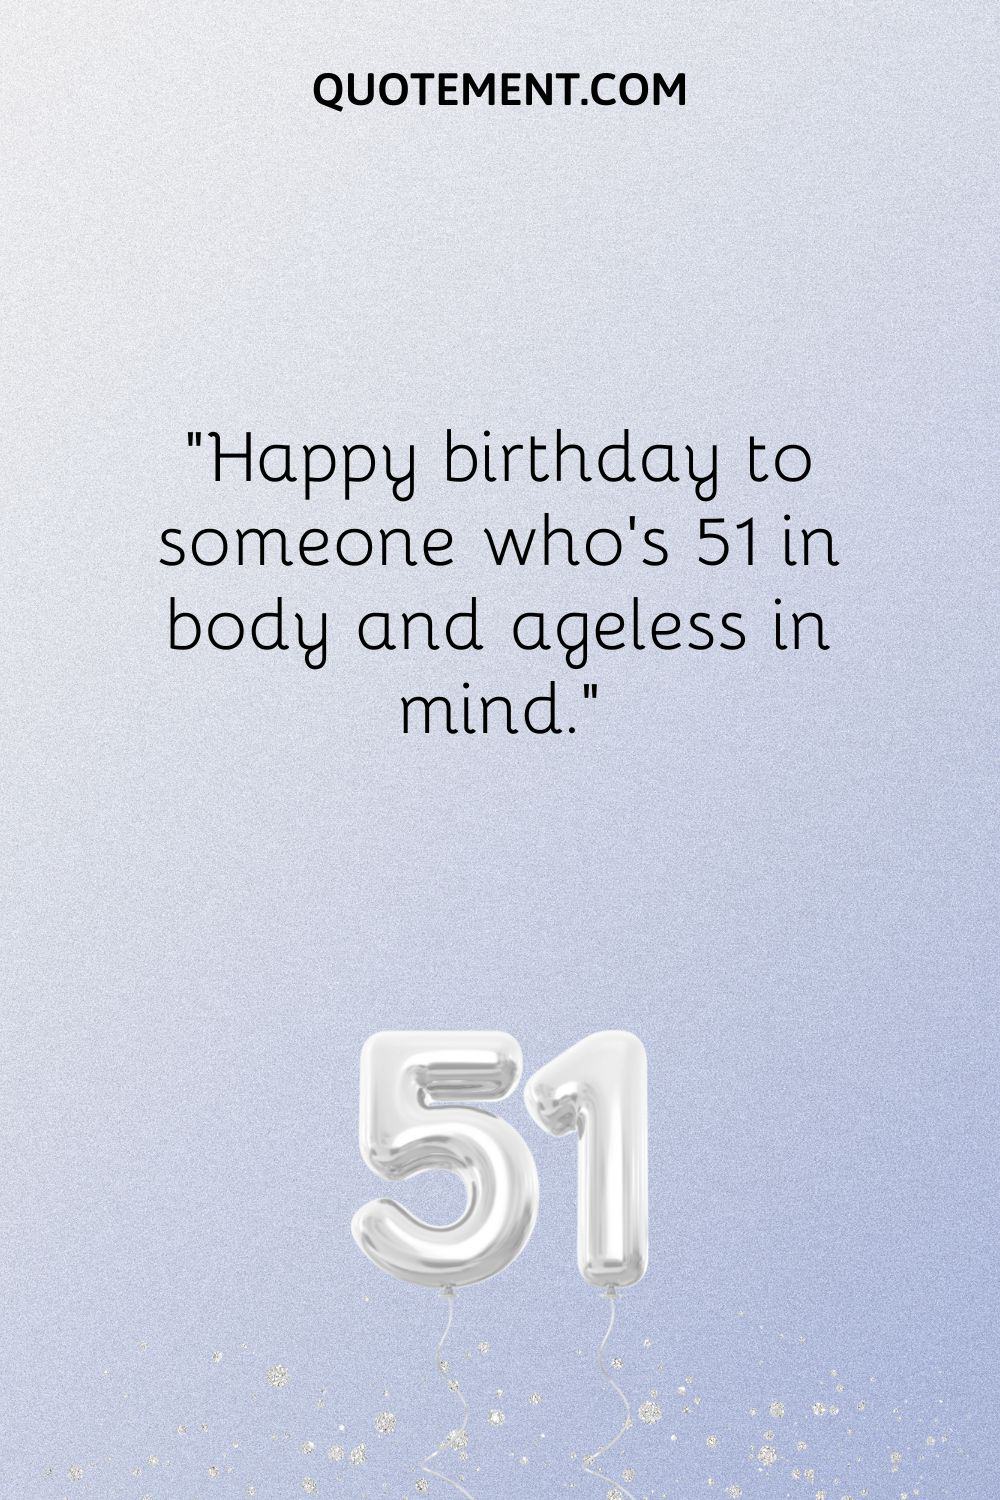 number balloon image representing happy 51st birthday wish